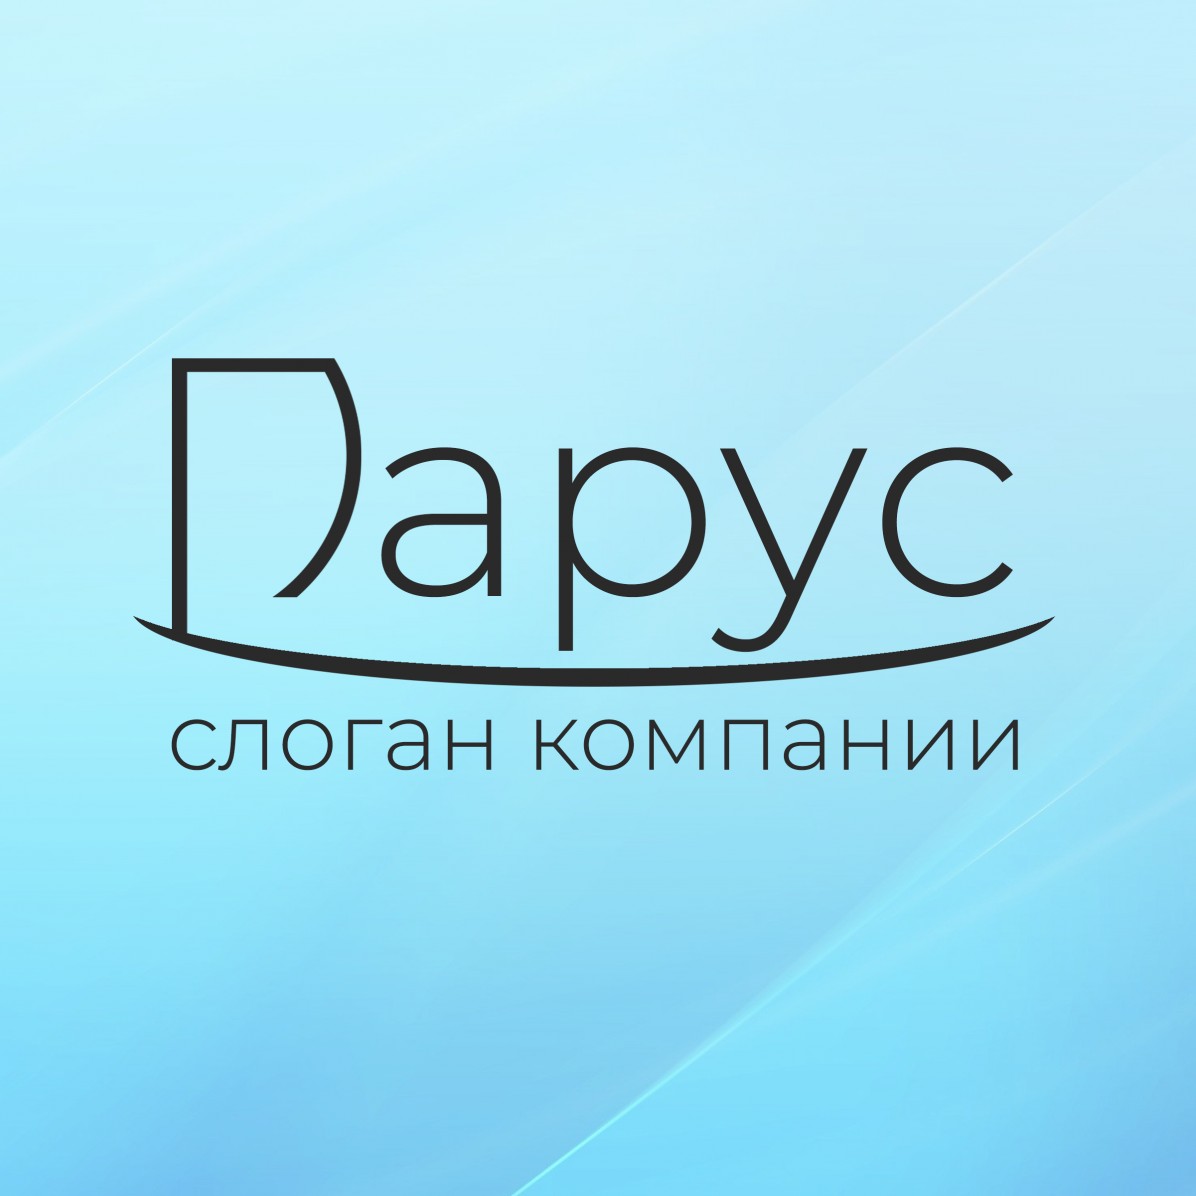 Логотип Парус